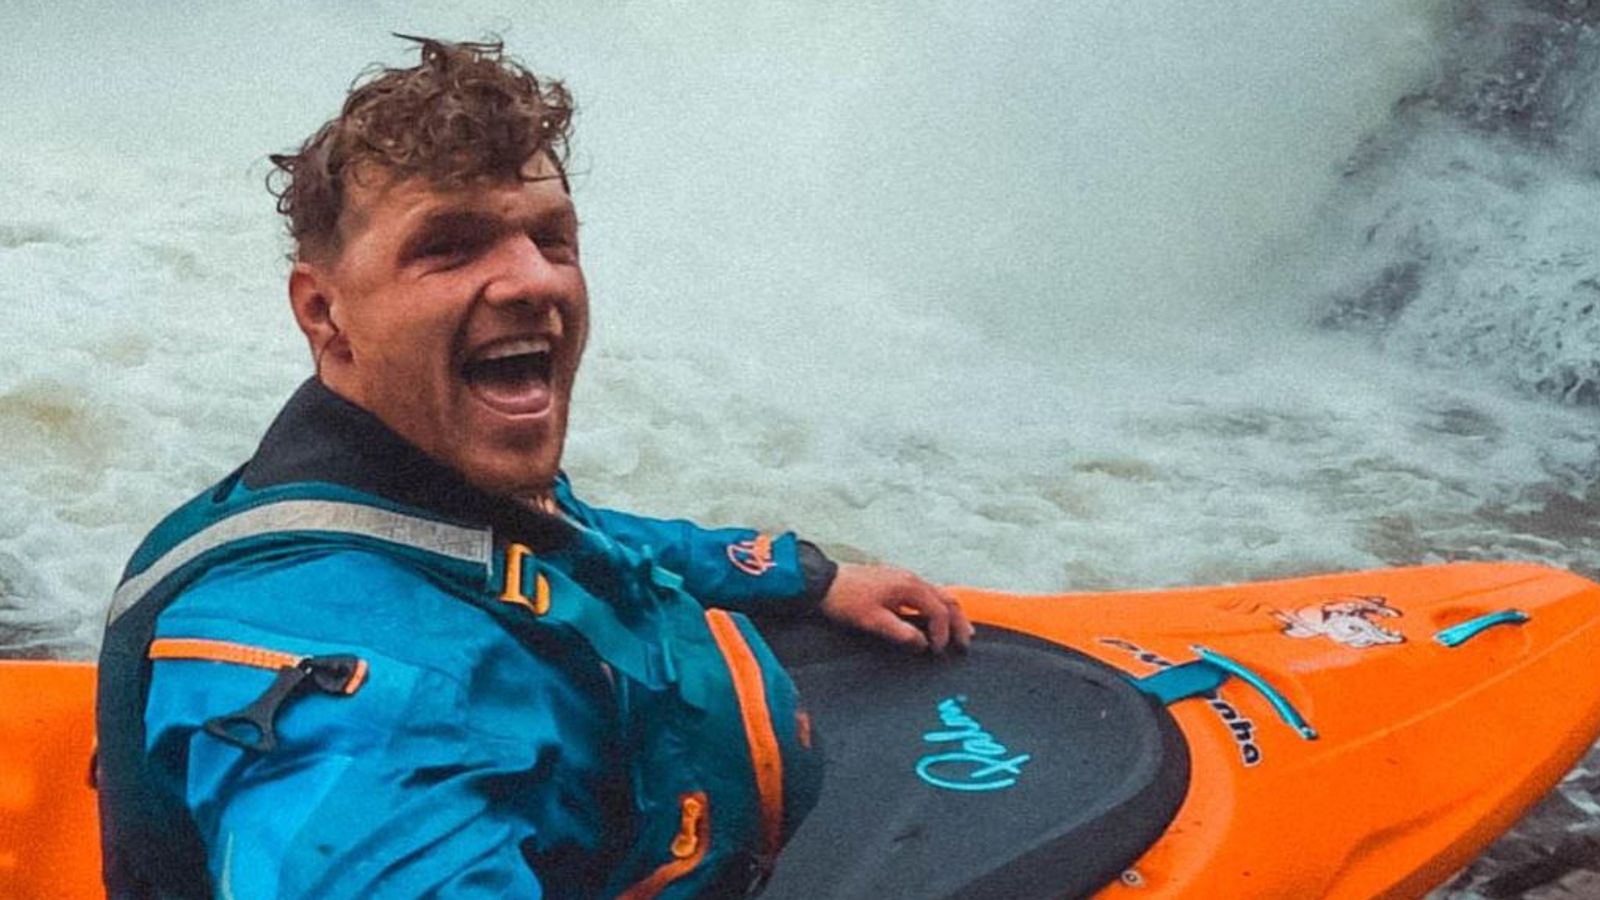 Bren Orton: Body of British 'kayaking legend' found in Italian lake